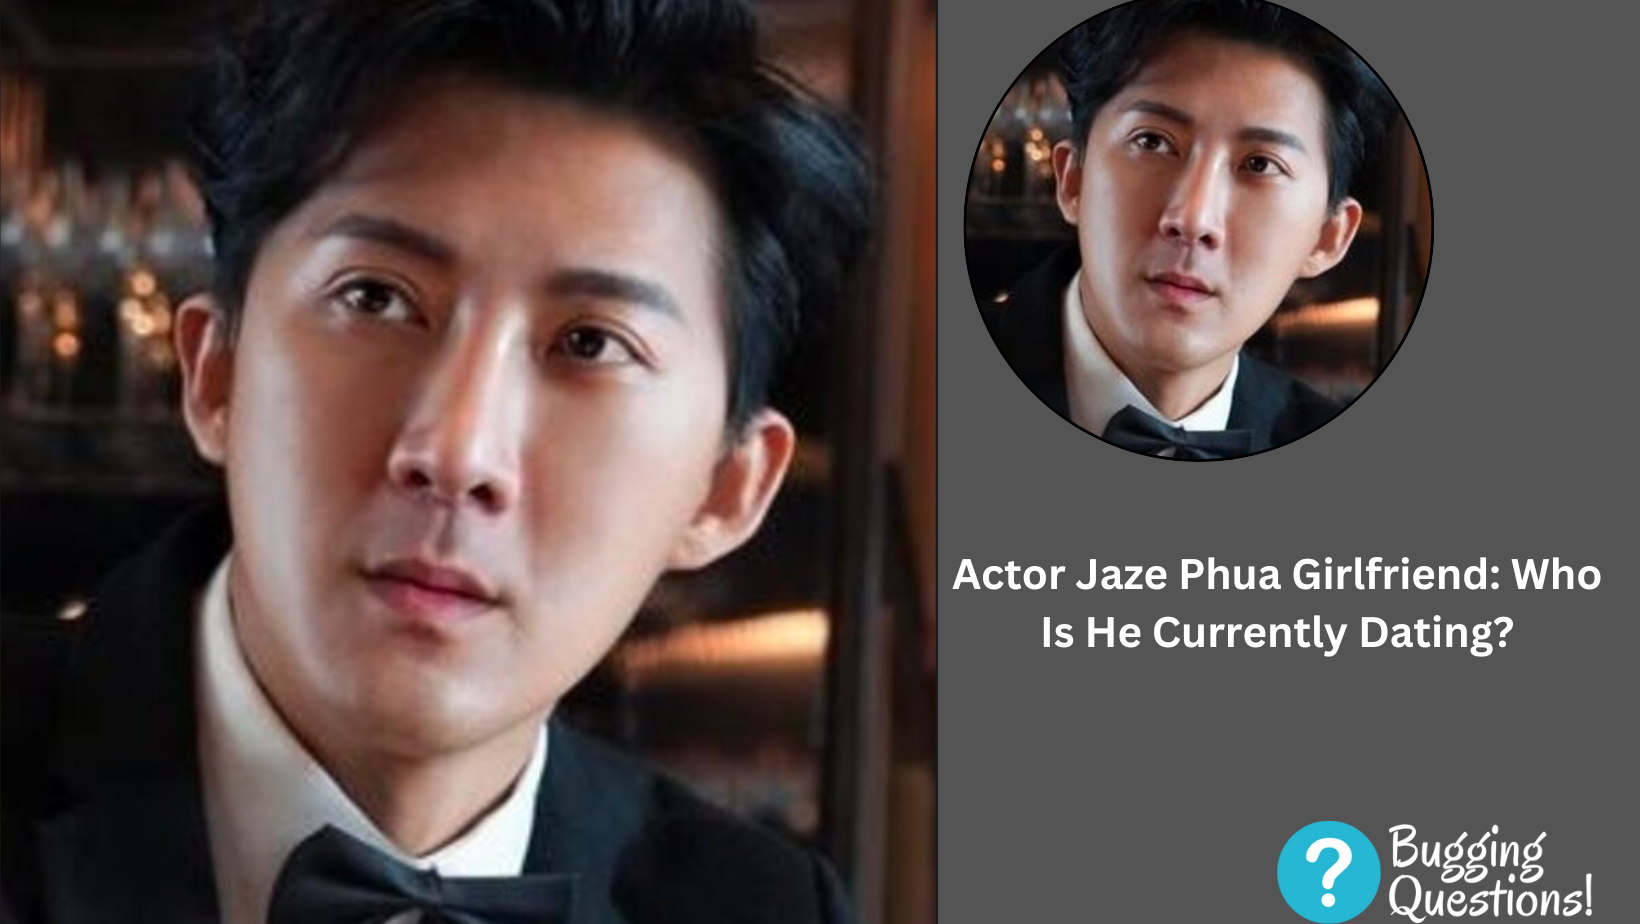 Actor Jaze Phua Girlfriend: Who Is He Currently Dating?